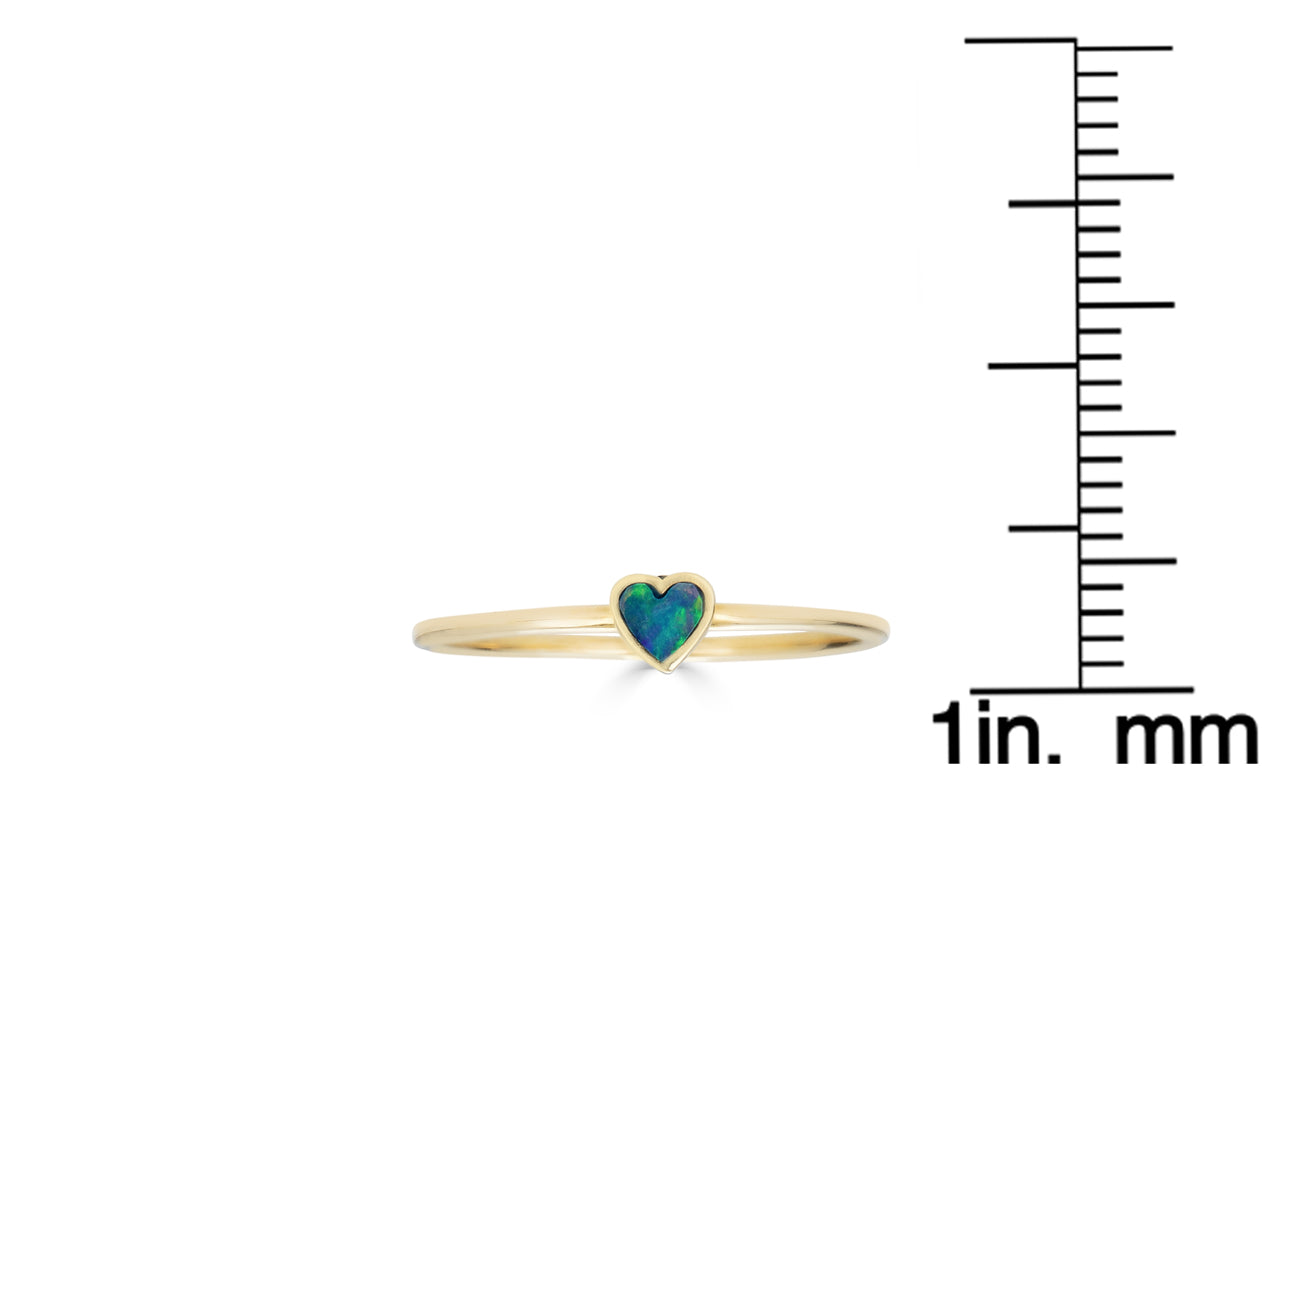 tiny opal inlaid heart ring_6db27810 3d8c 41ef bd38 a5561006921d